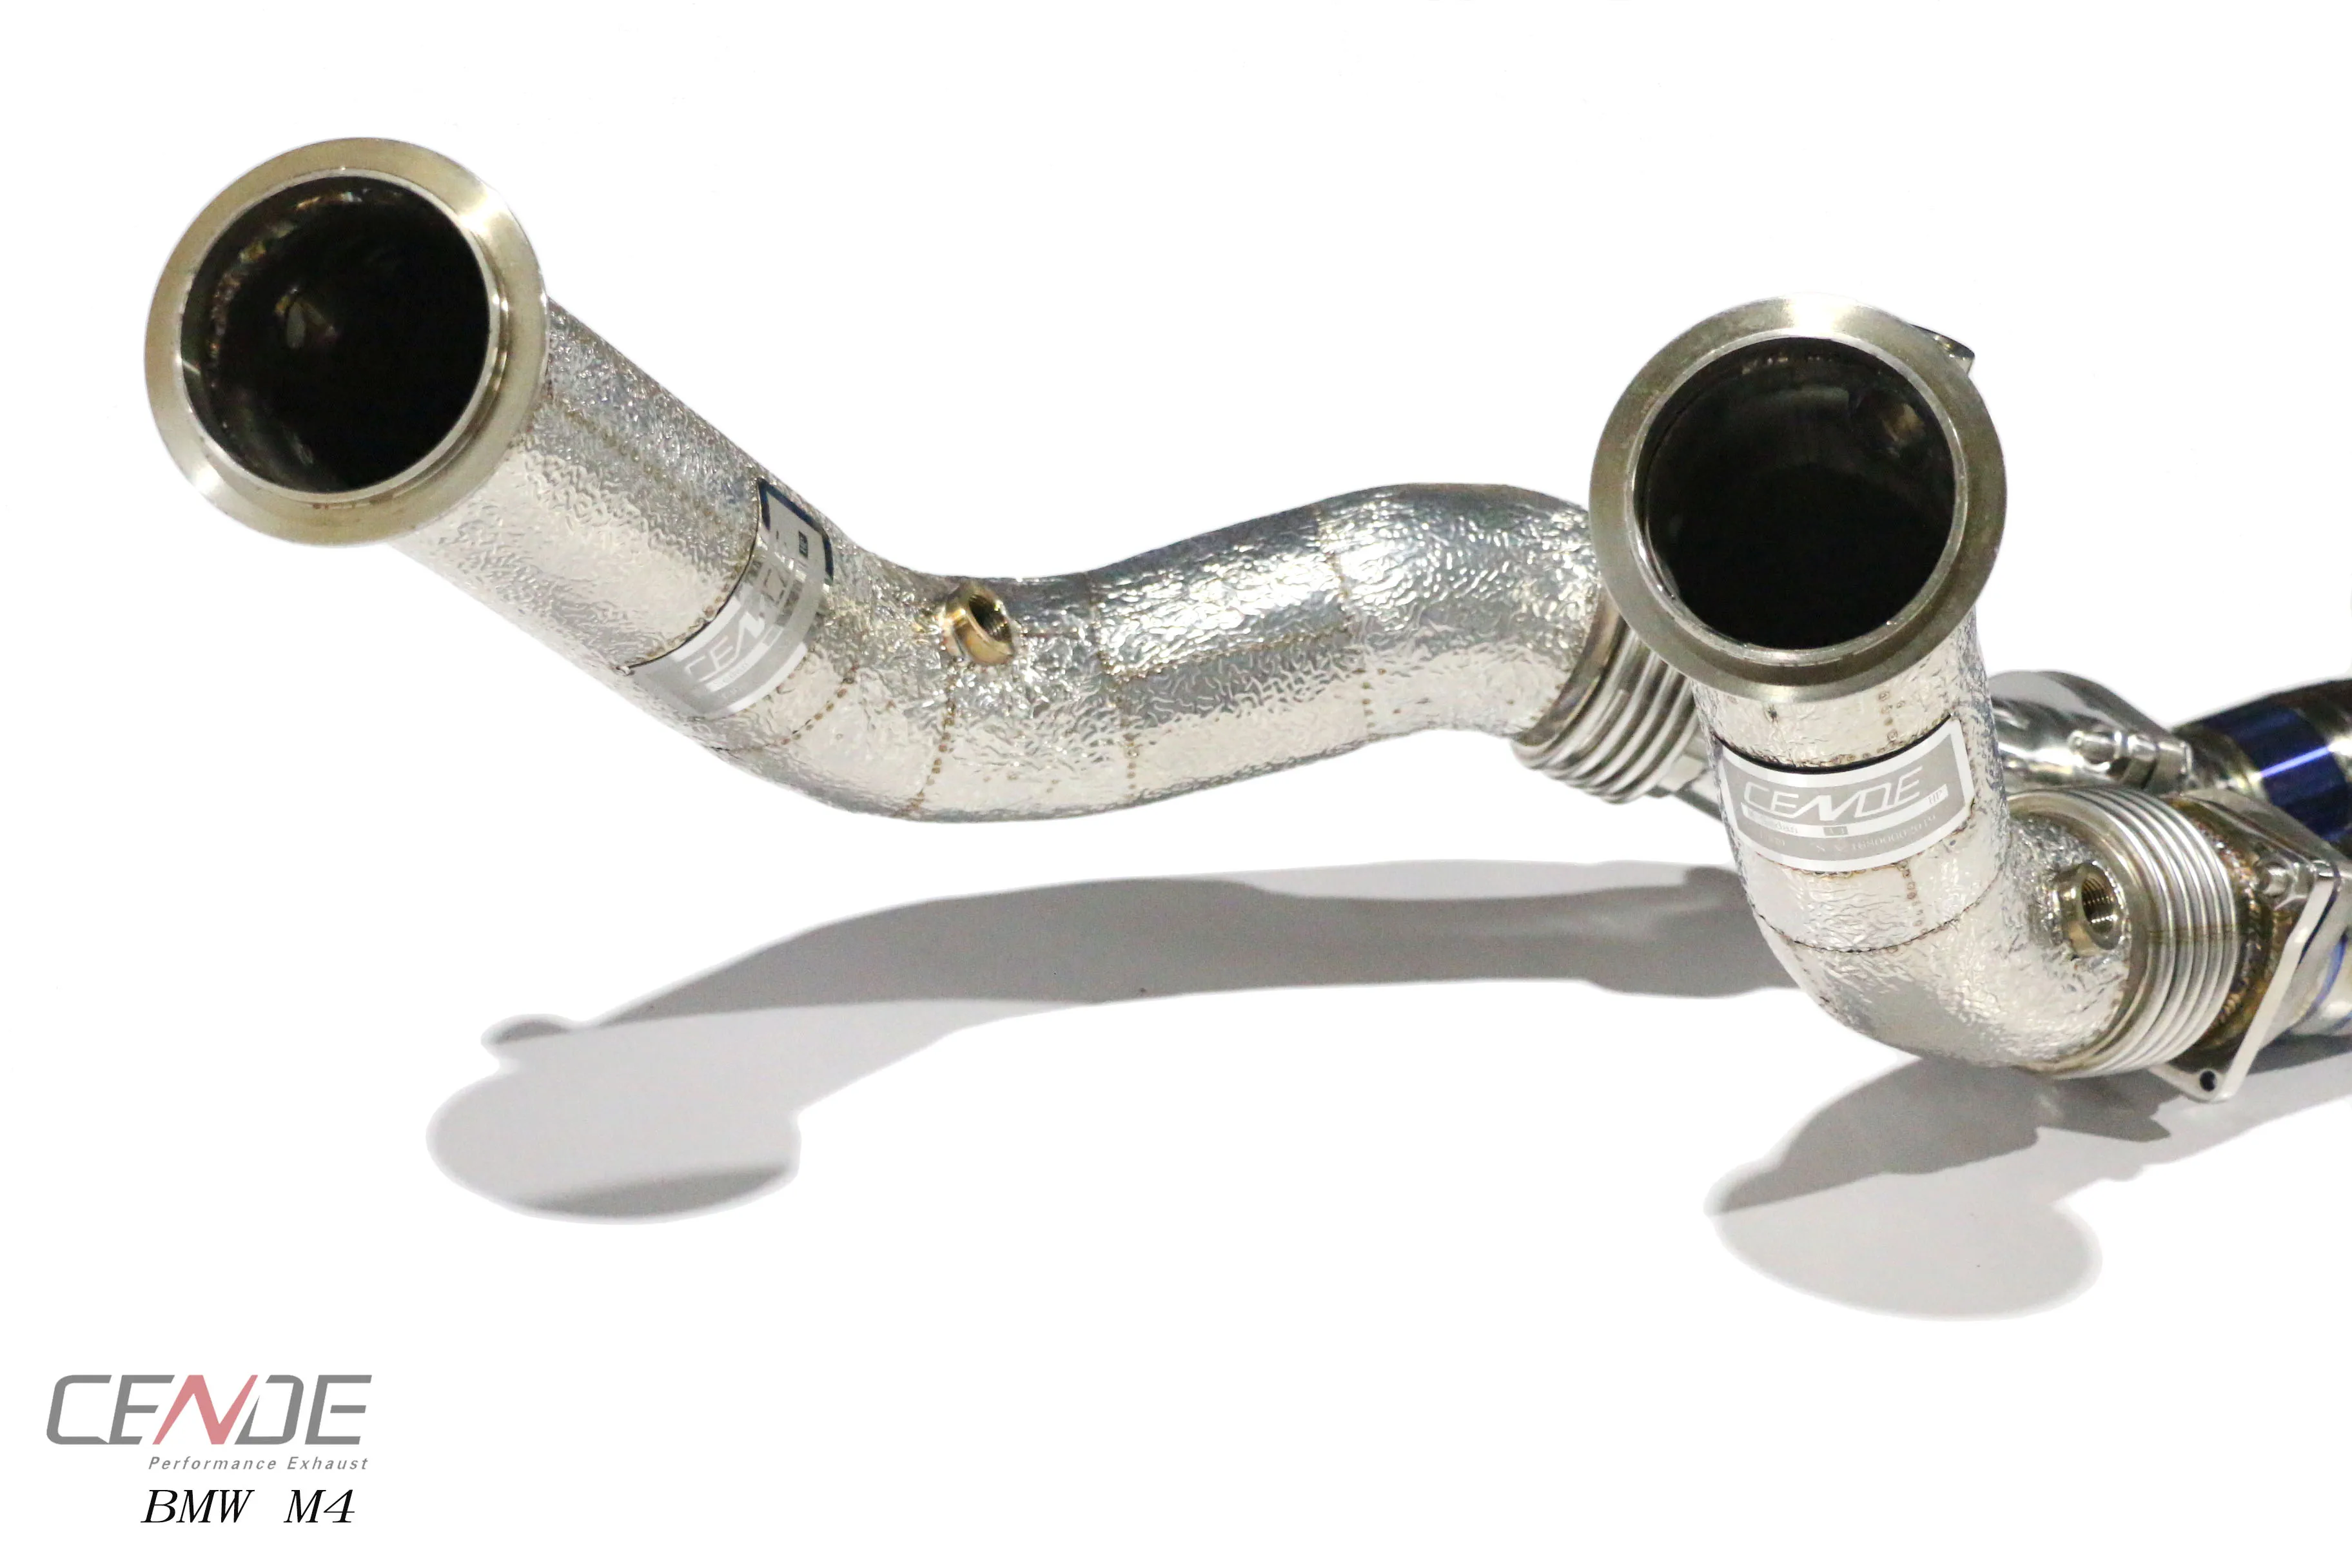 Factory  muanfurer  CENDE  car exhaust pipe muffler For BMW M4